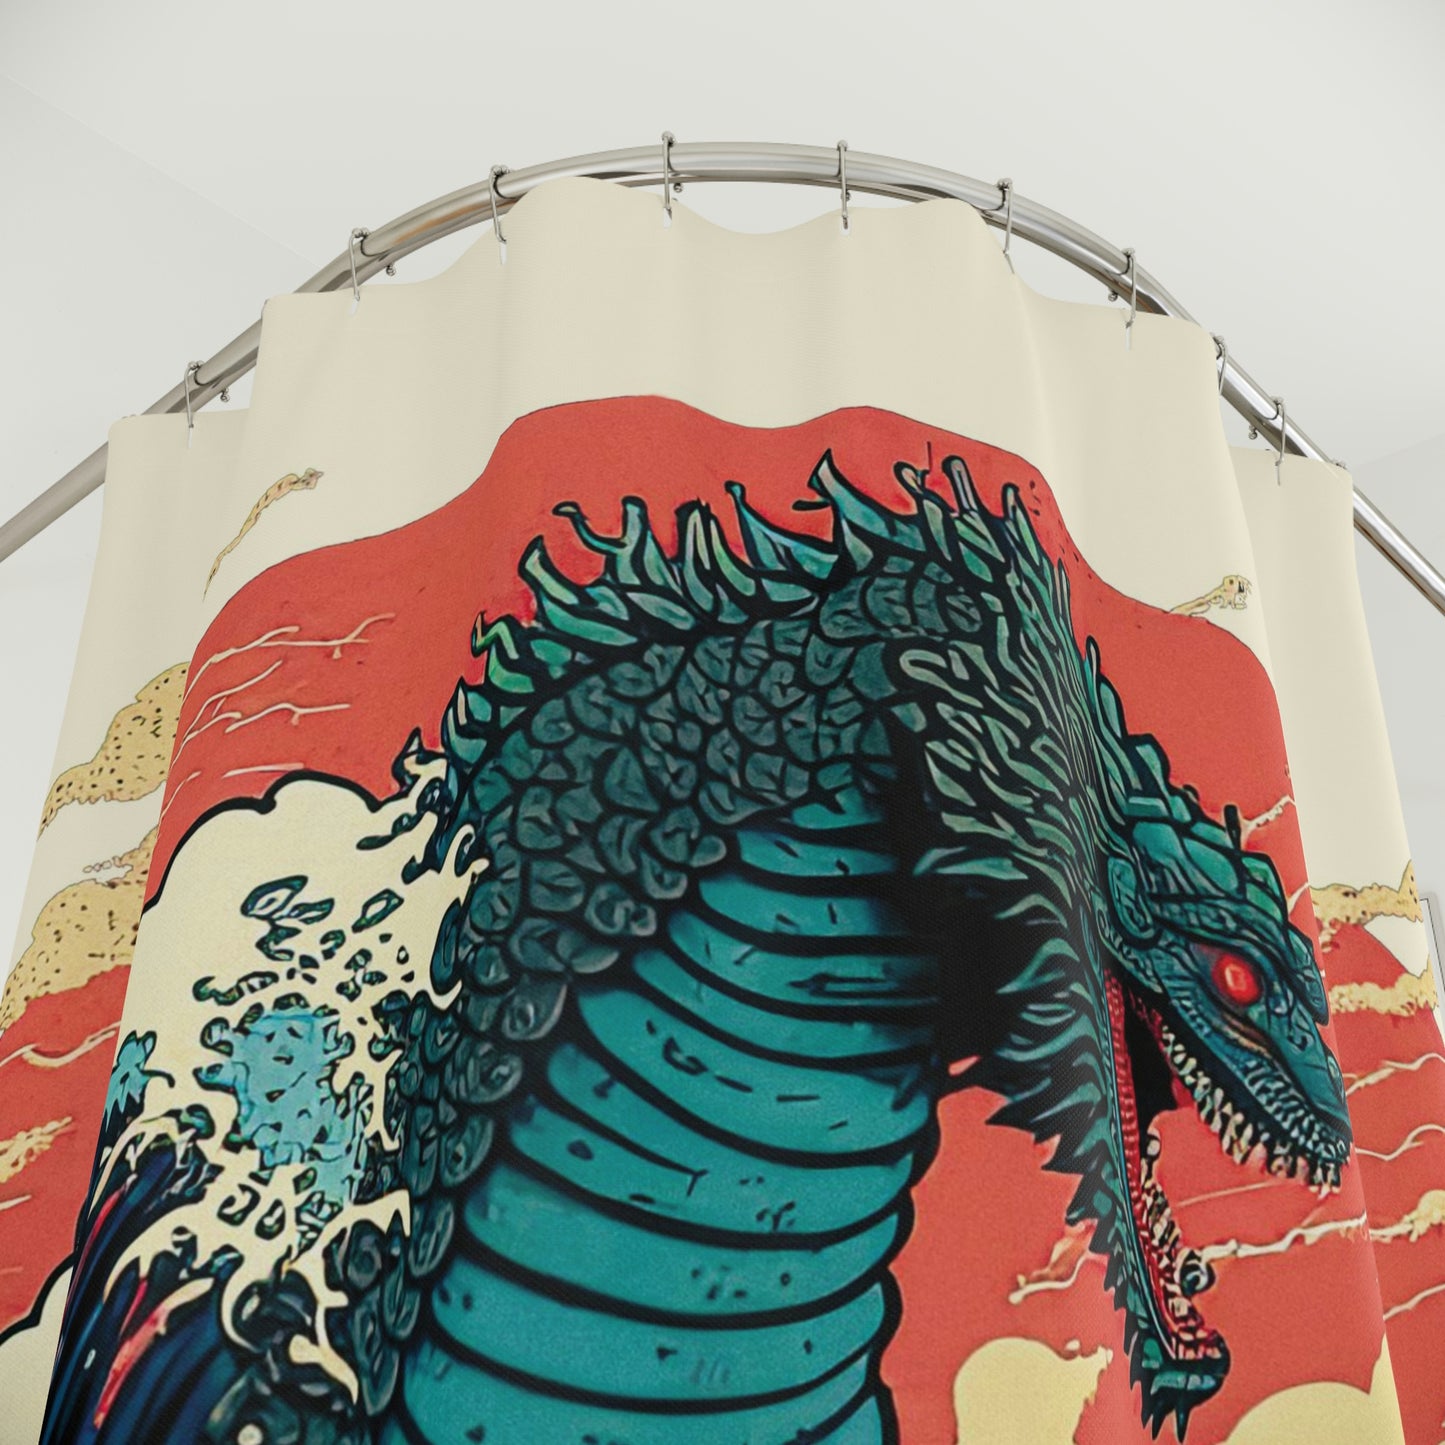 Godzilla Shower Curtain, Japanese Shower Curtain, Ukiyo-e Inspired Traditional Japanese Art, Great Wave